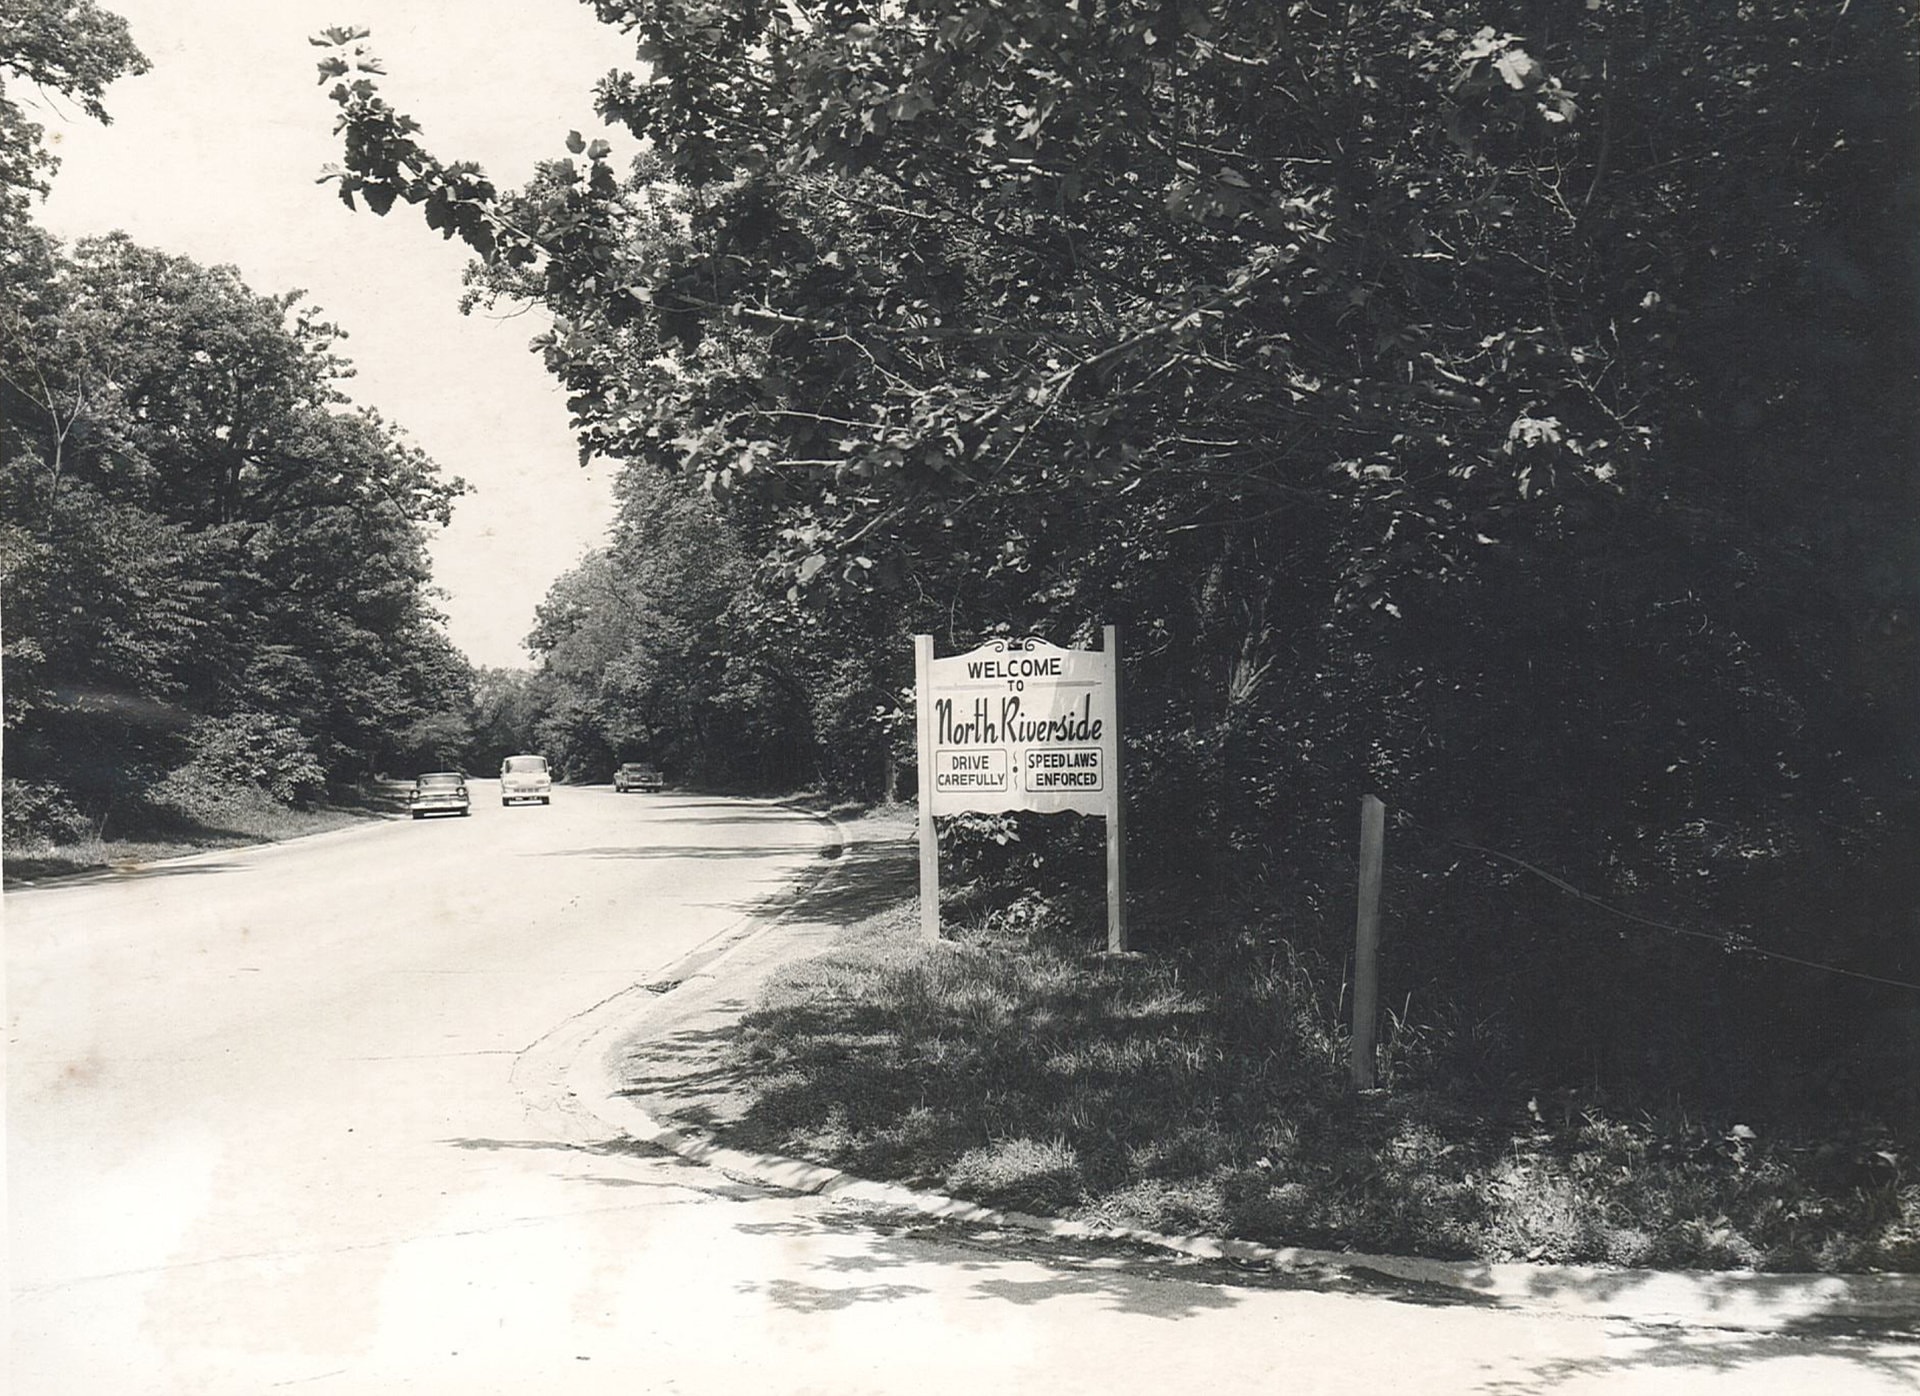 Old image of north riverside sign